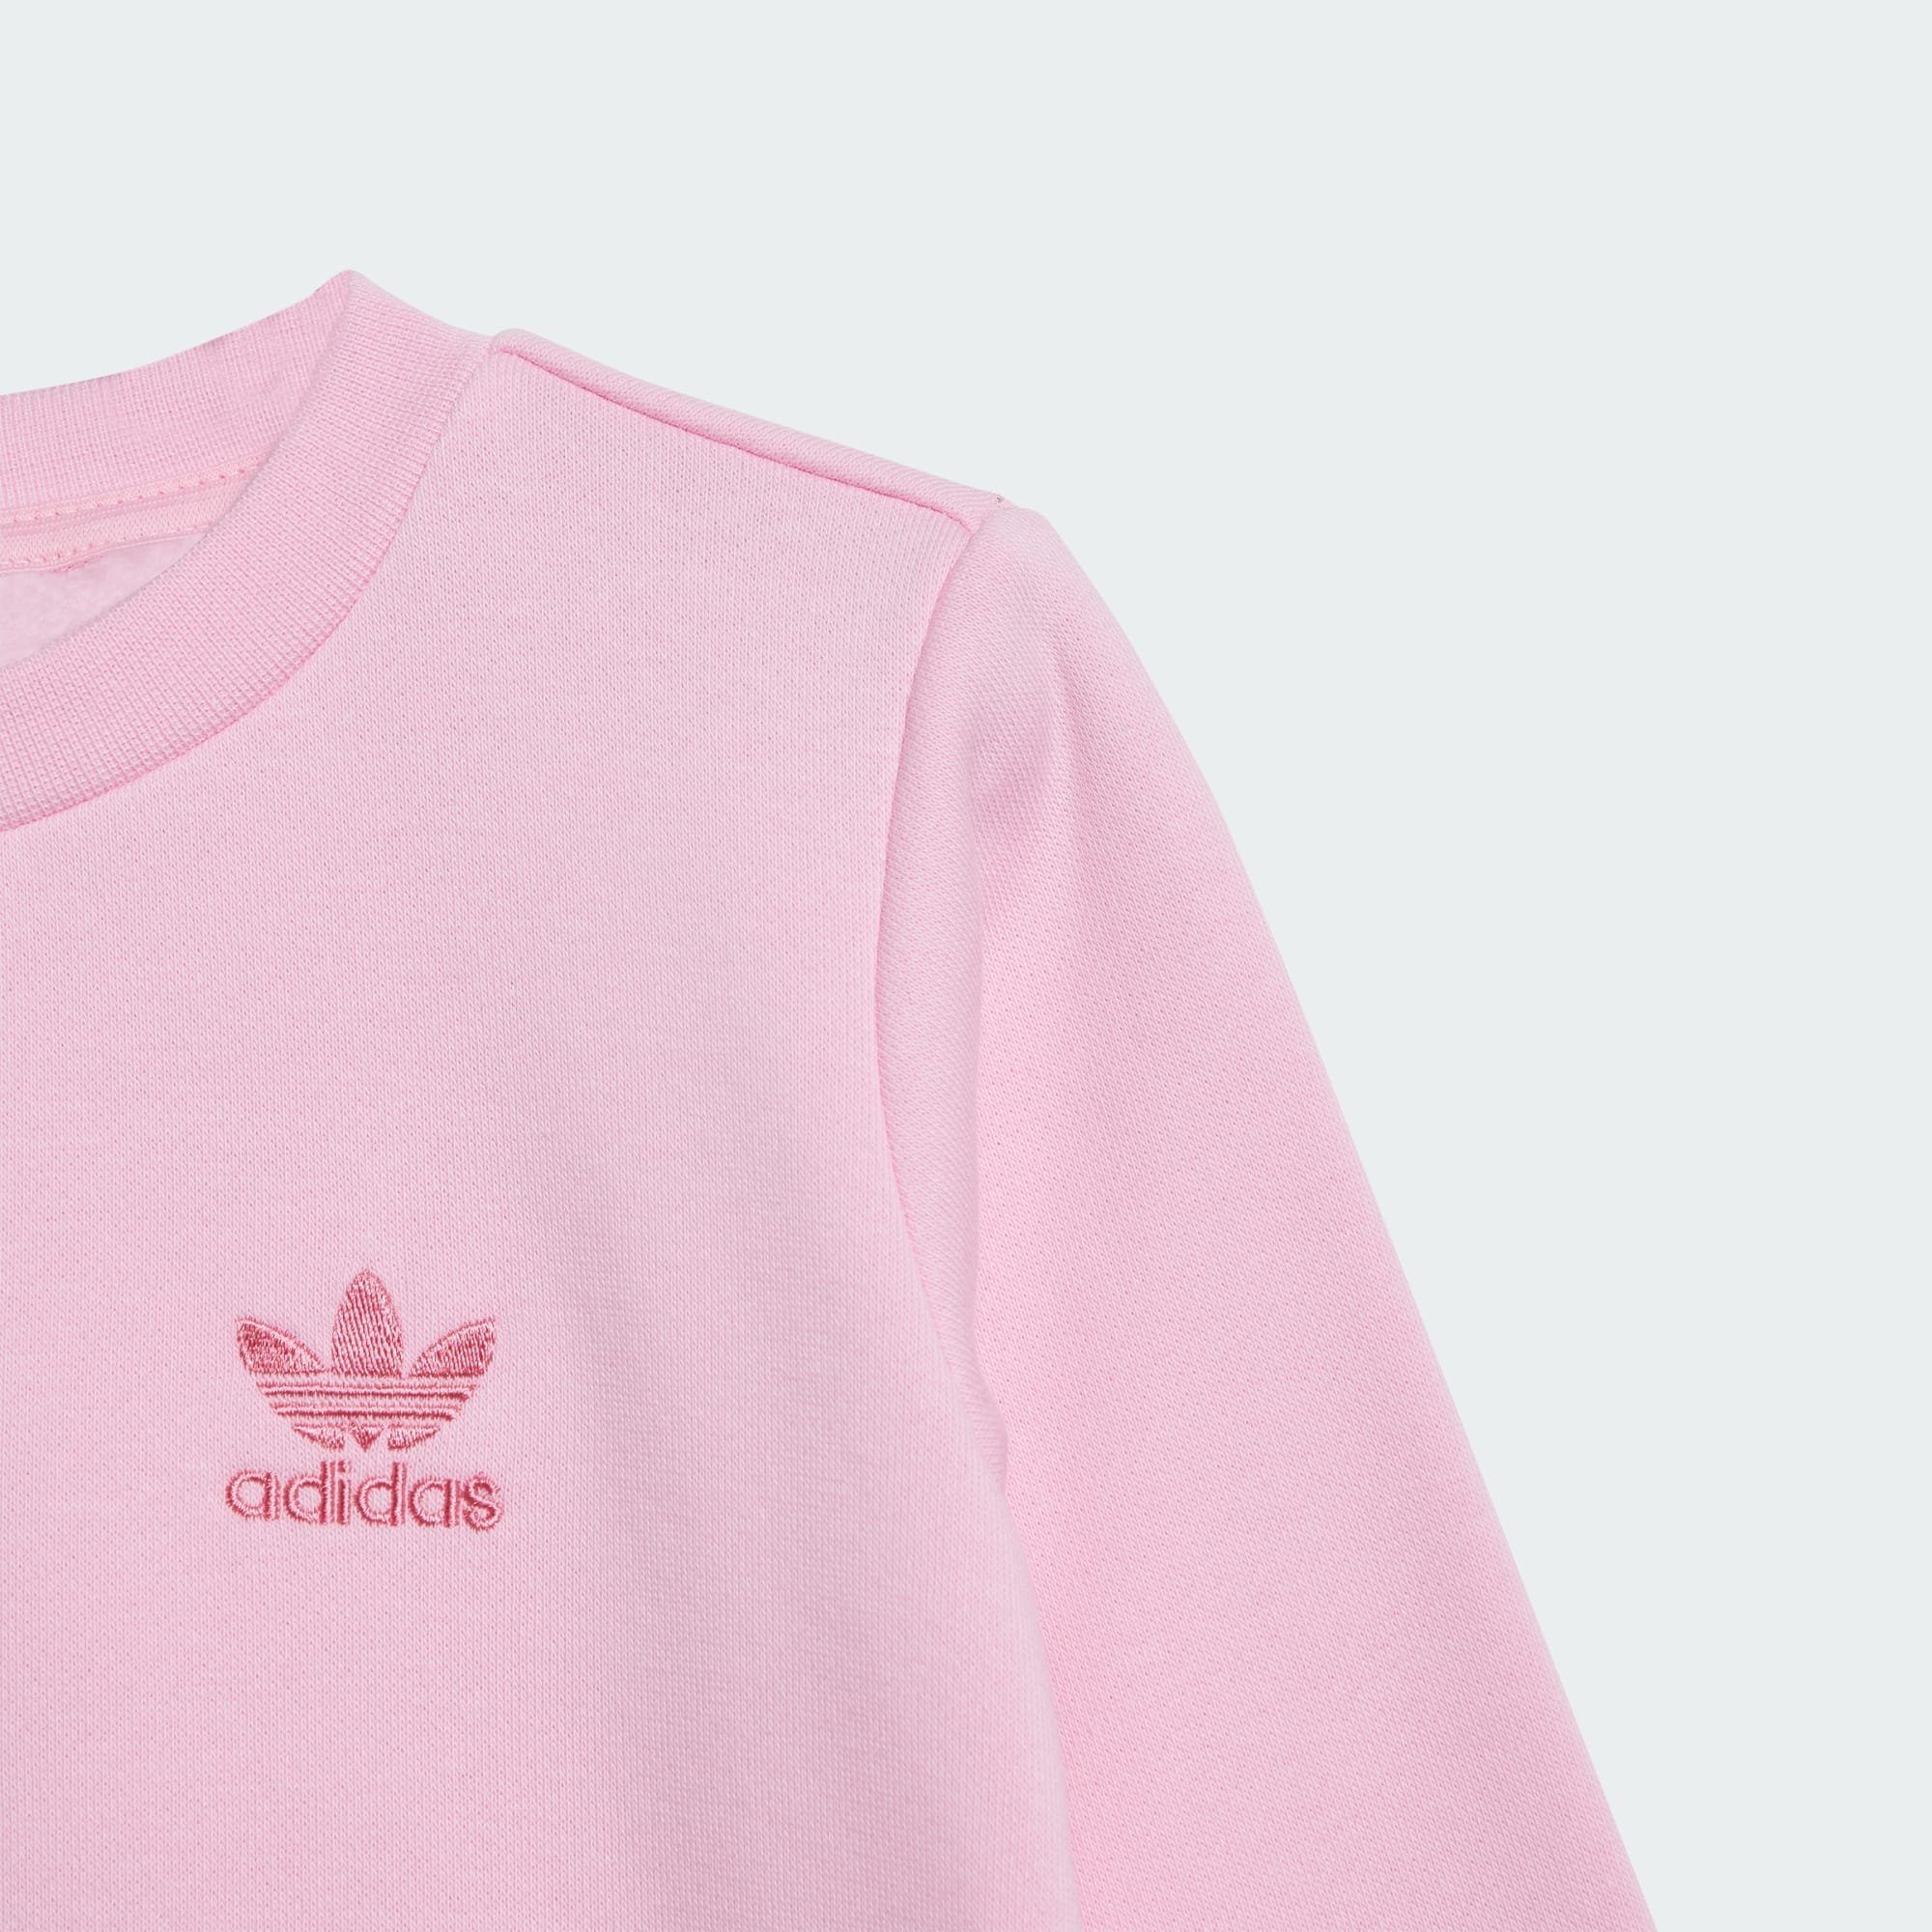 adidas Originals SET Pink ADICOLOR True Trainingsanzug